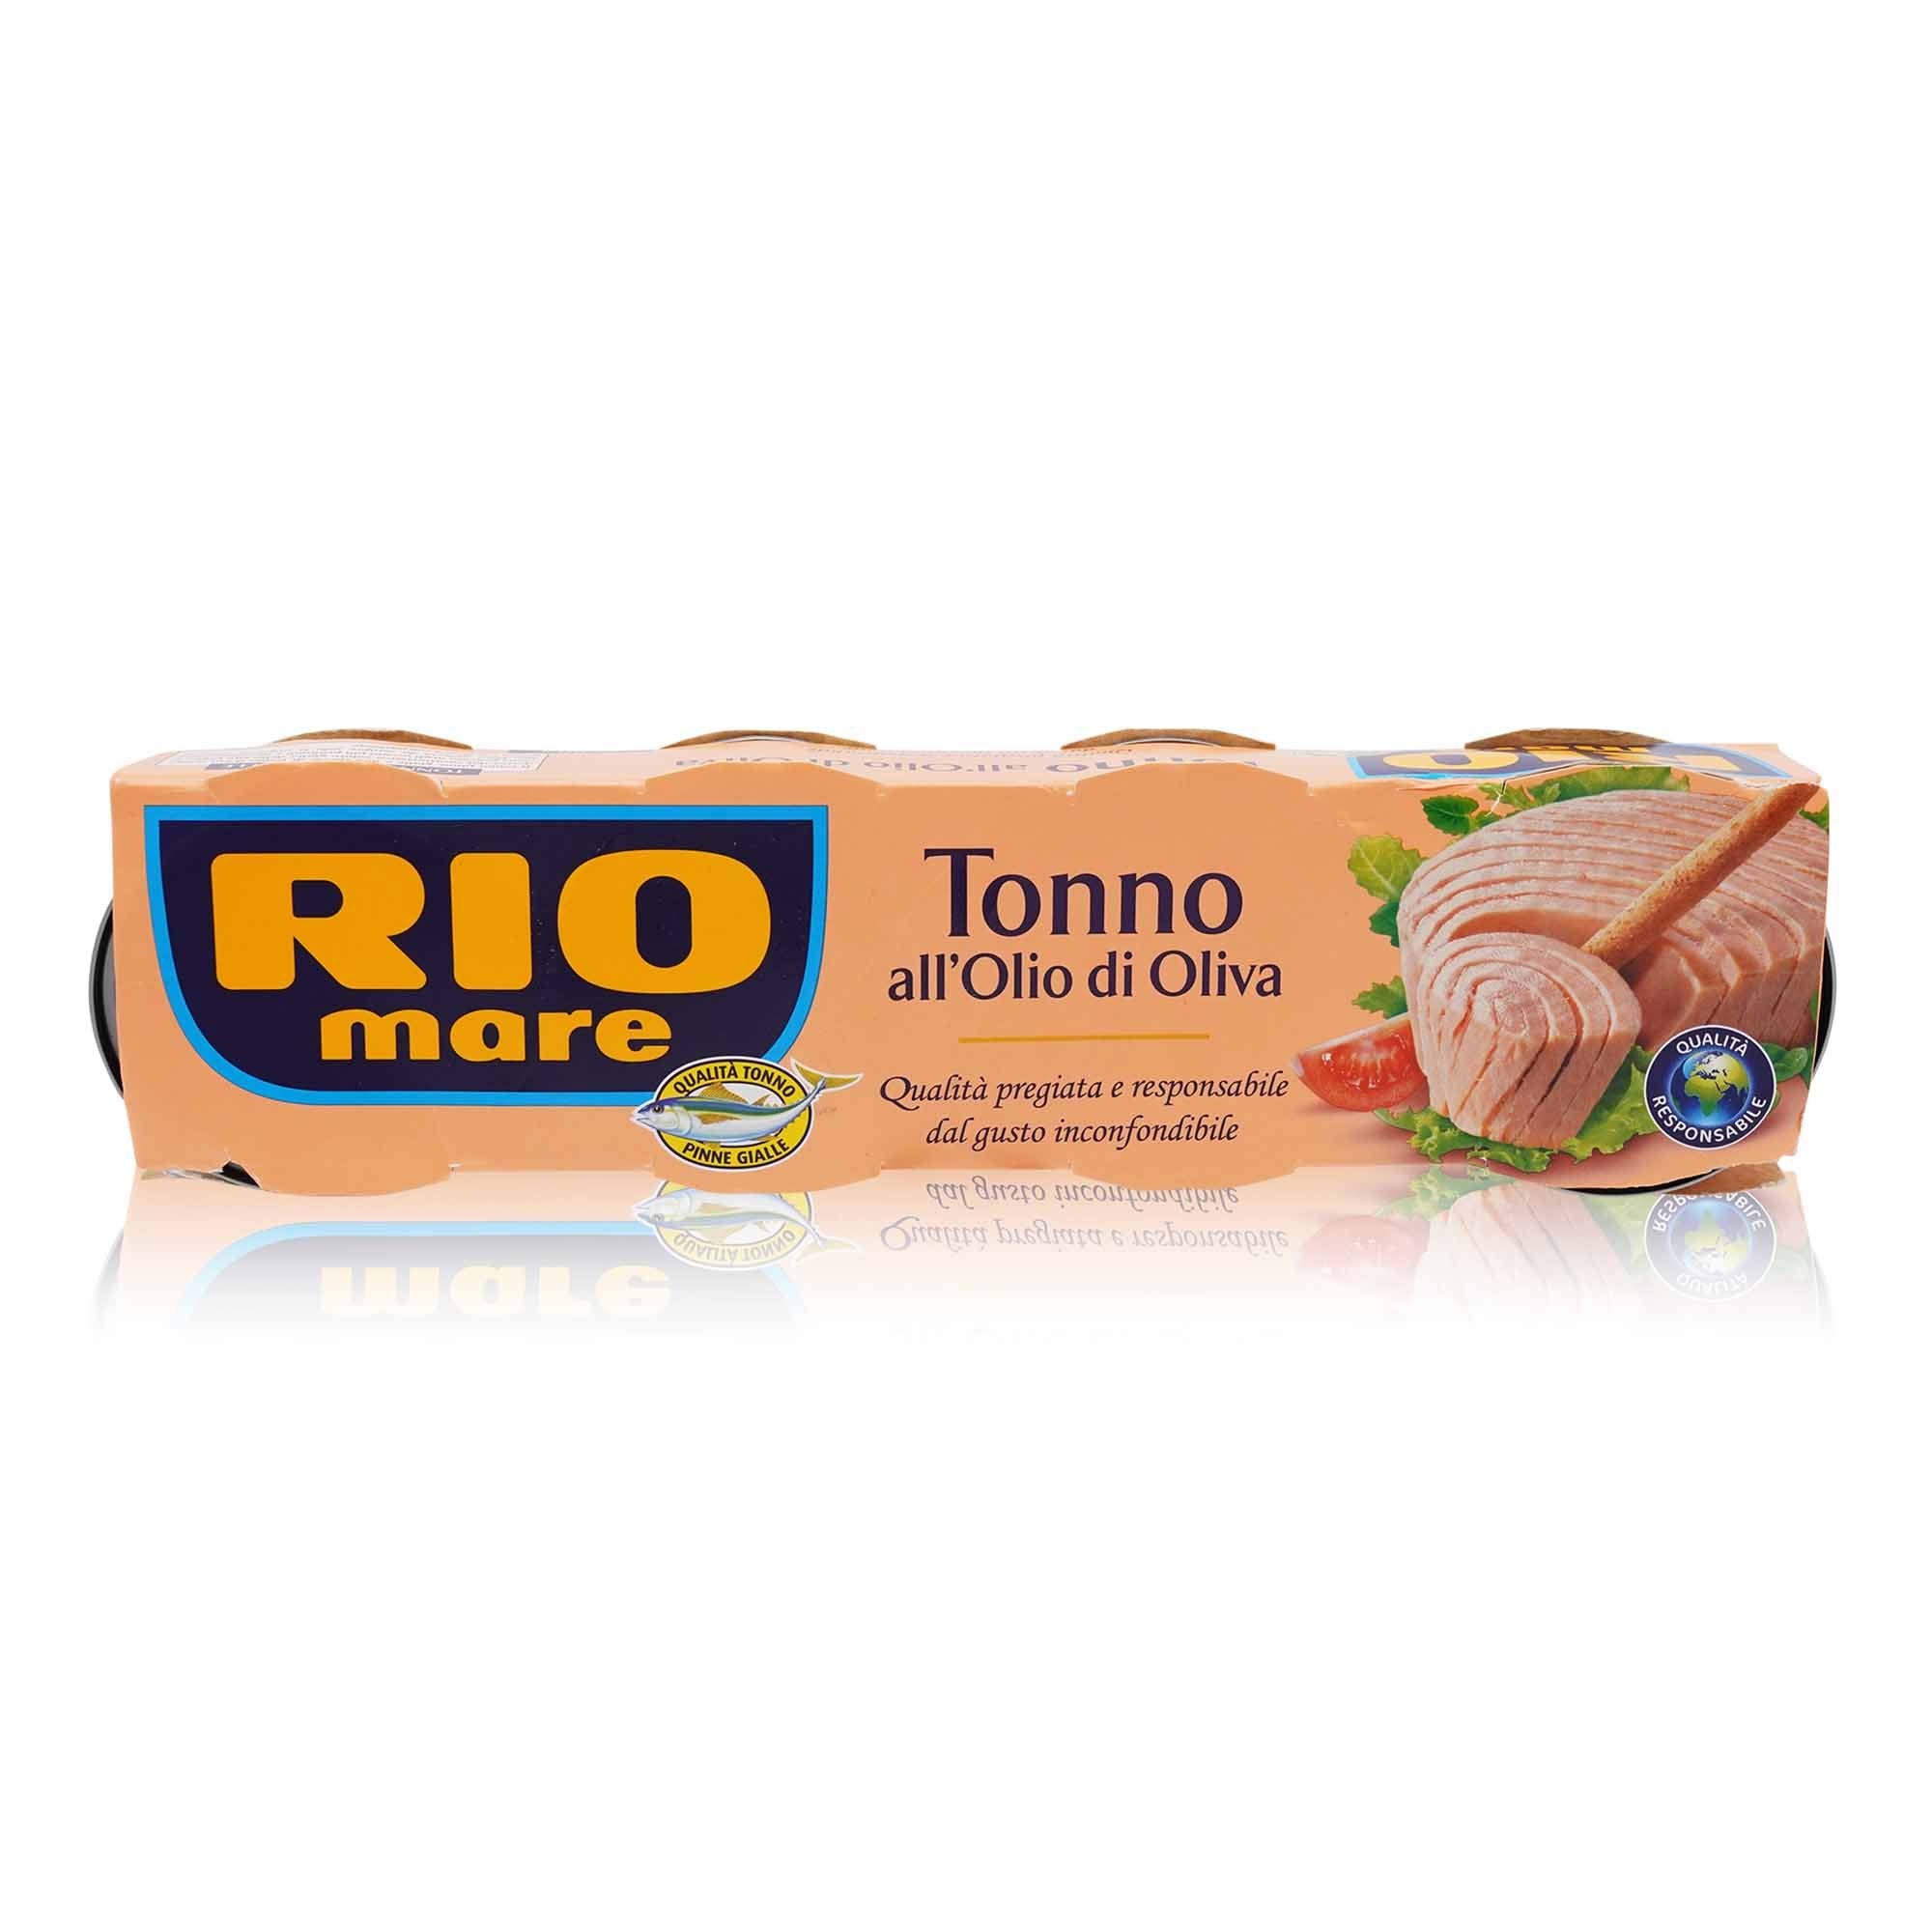 RIO MARE Tonno all'Olio di Oliva – Thunfisch in Olivenöl - 0,320kg - italienisch - einkaufen.de